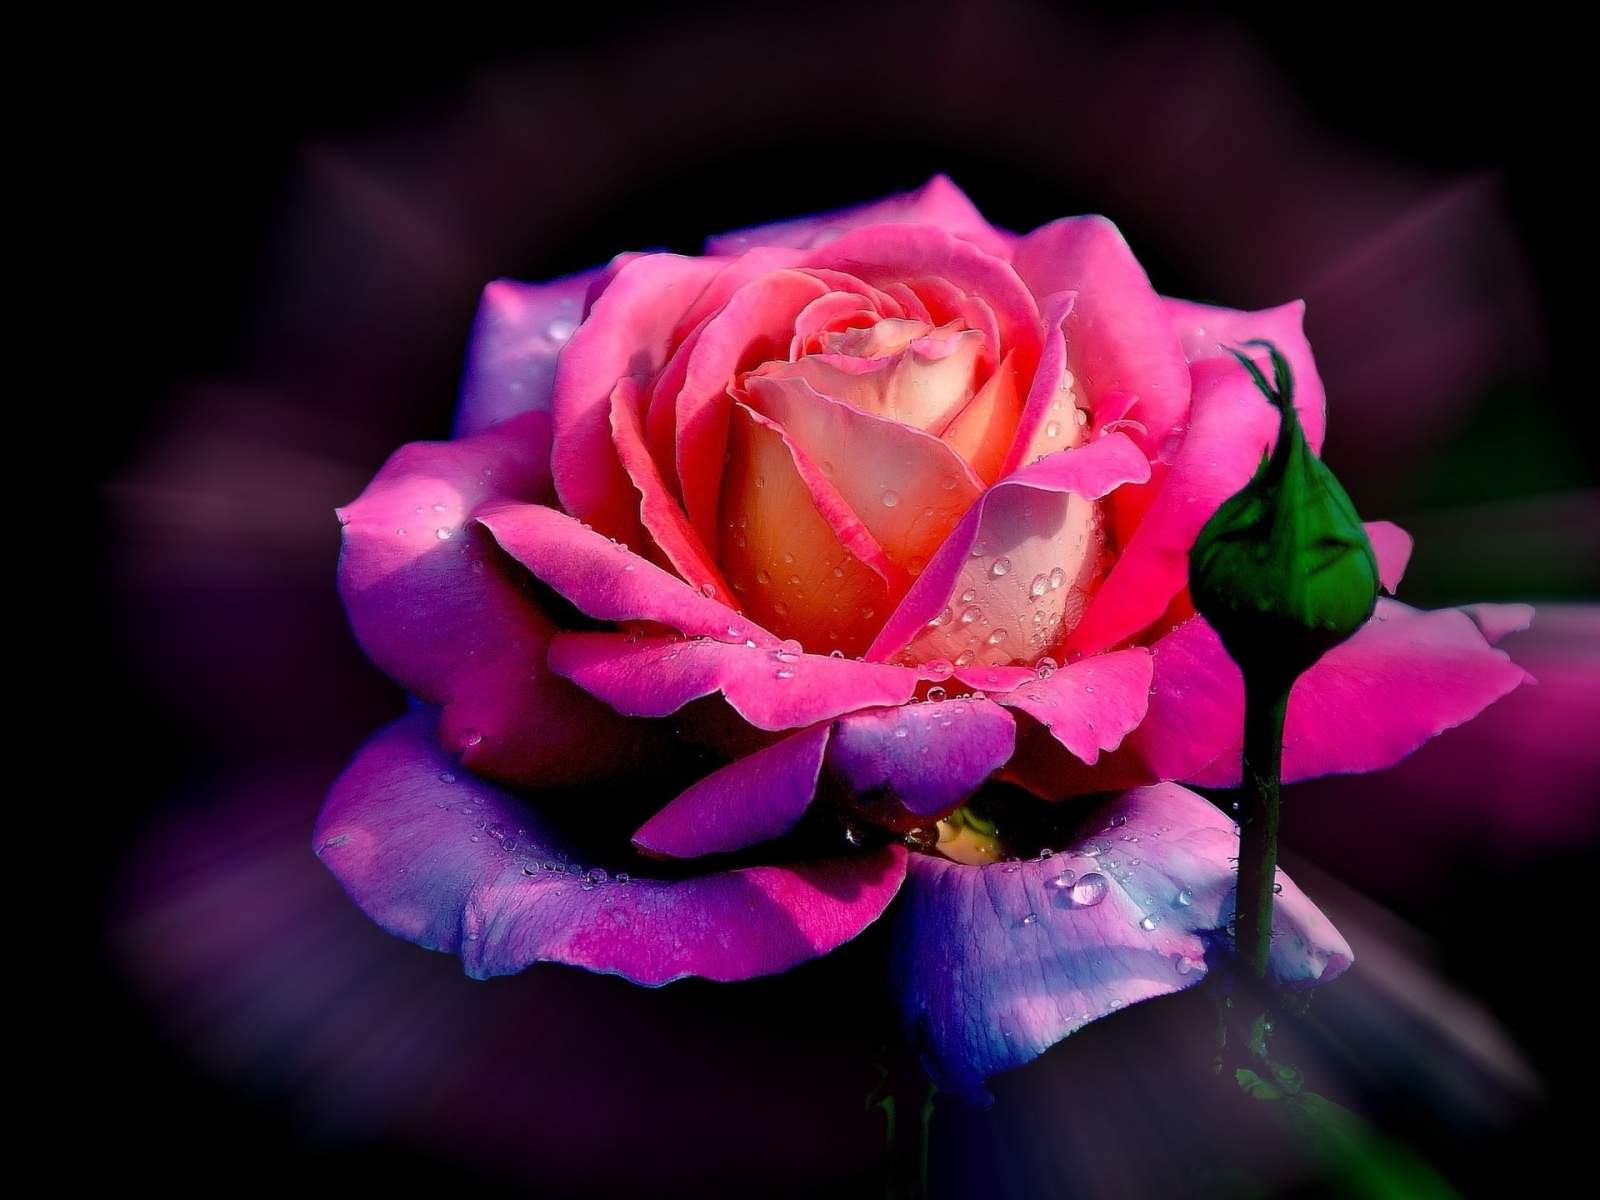 Download 1600x1200 Wallpaper Beautiful Rose Flower, Standard 4:3, Fullscreen,  1600x1200 Hd Image, Background, 3807